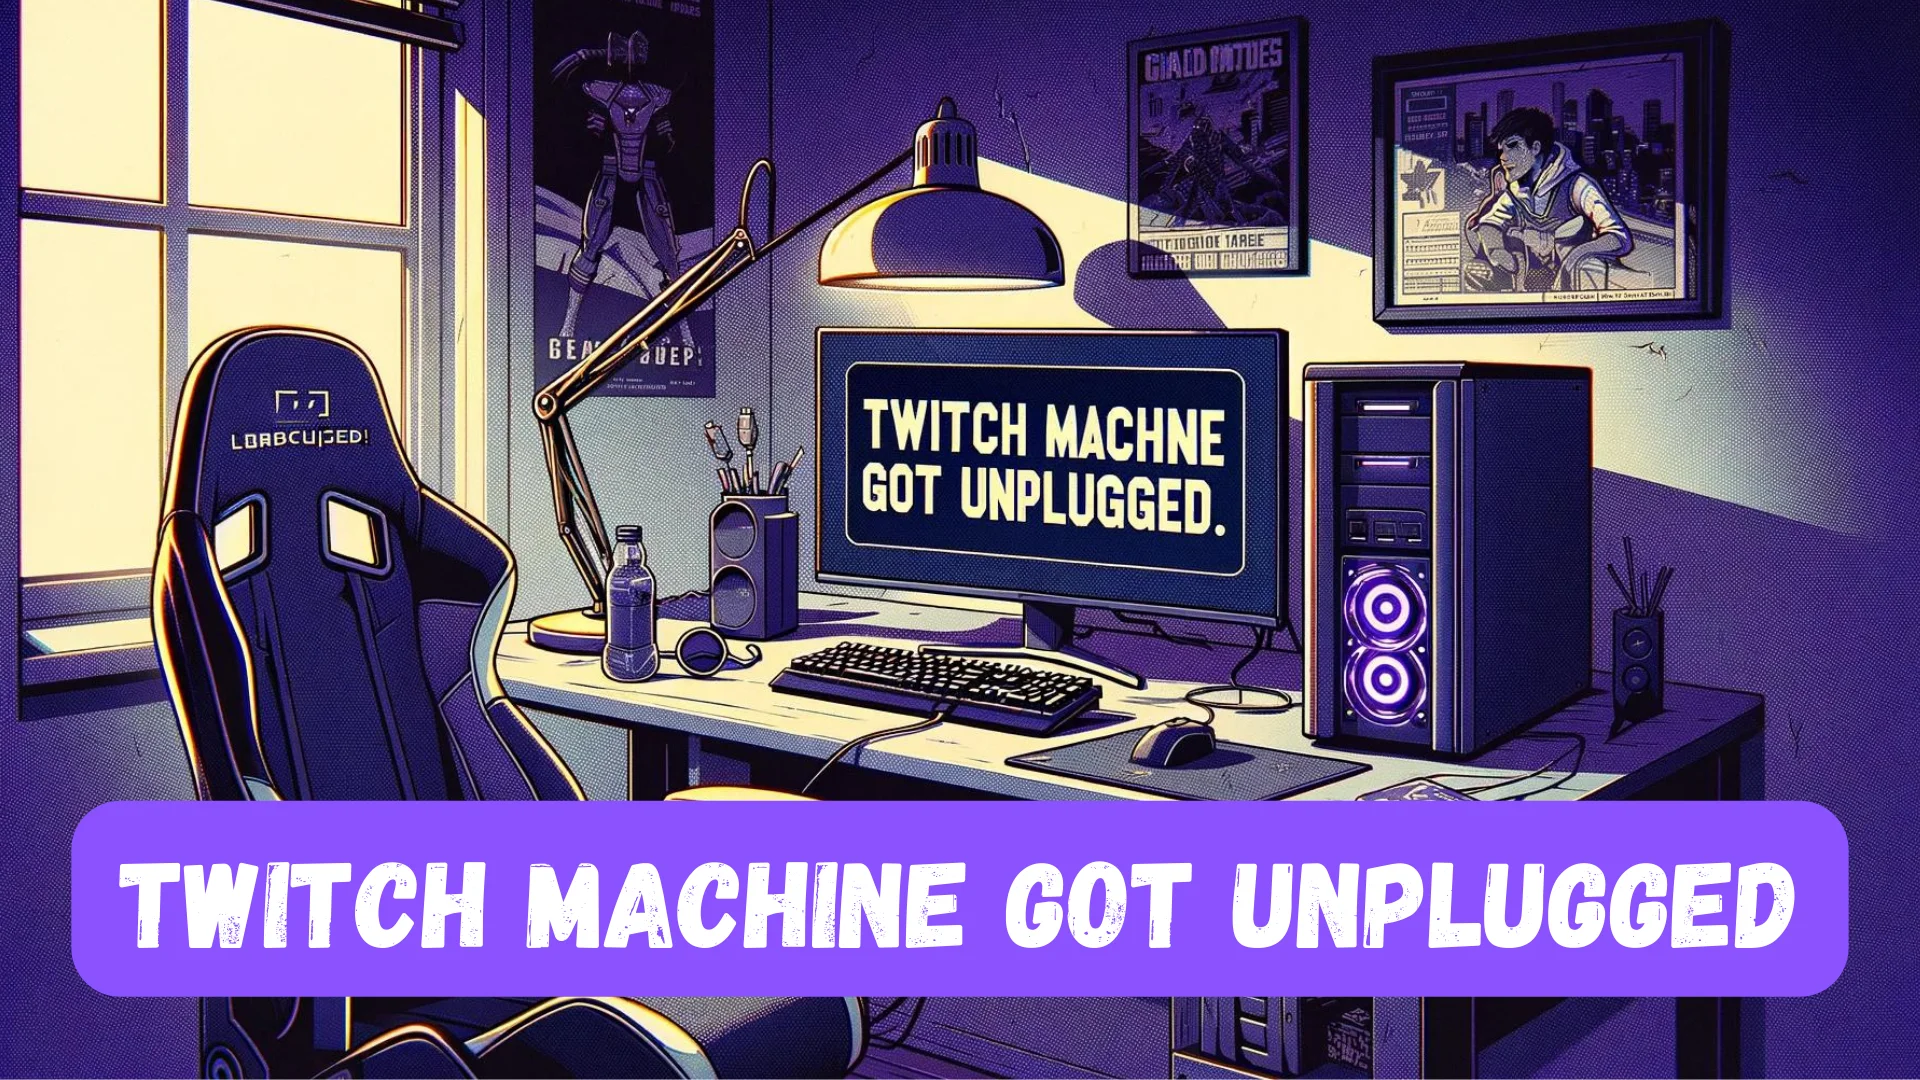 Twitch machine got unplugged